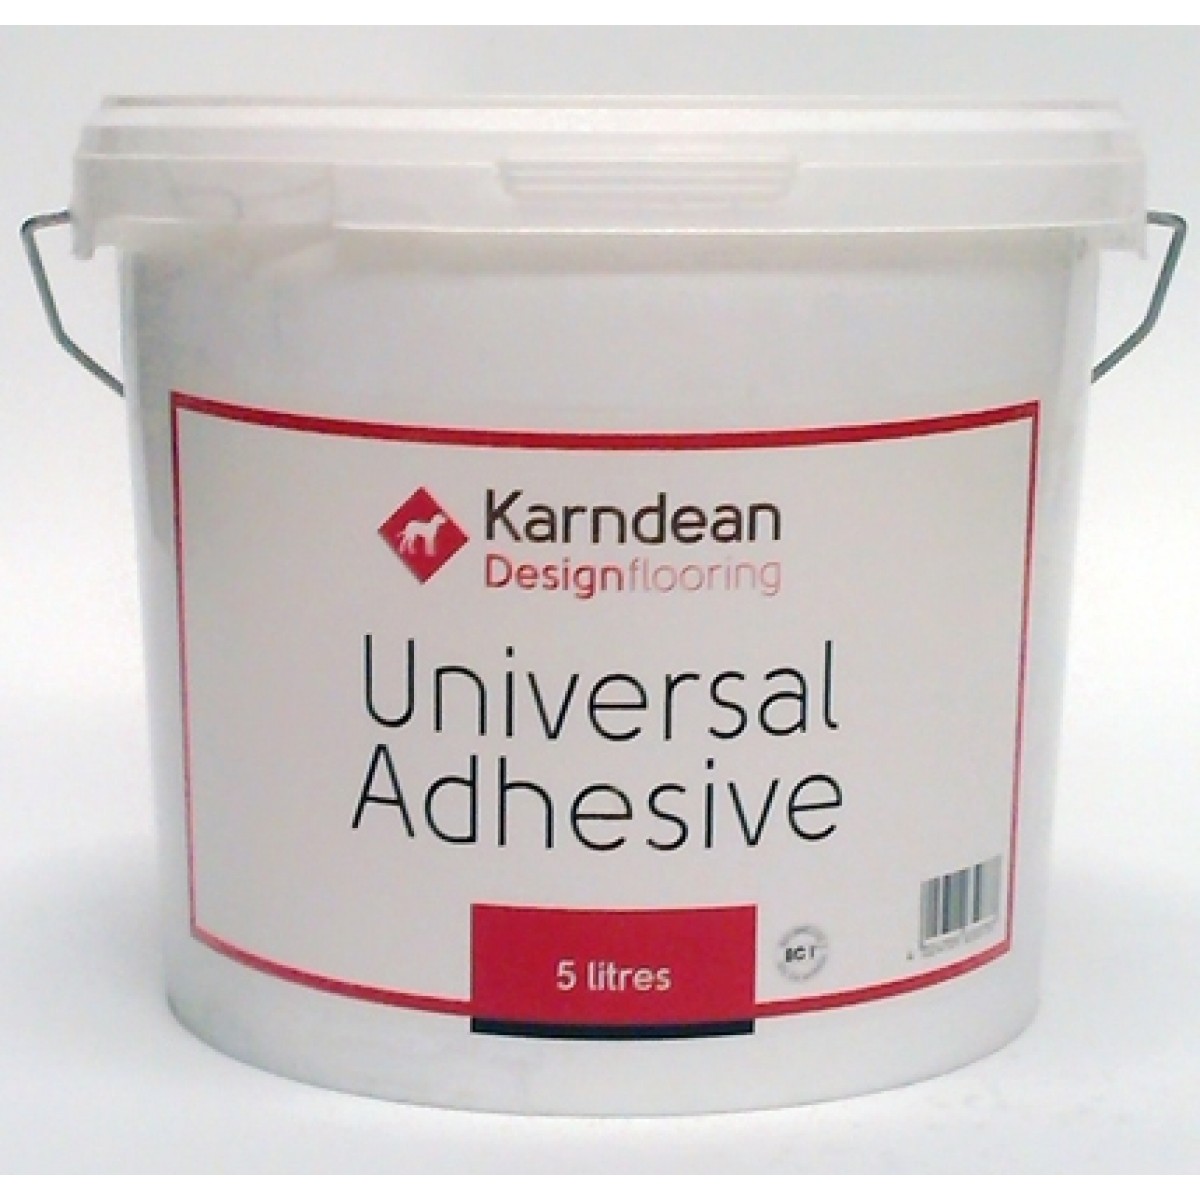 Adhesives for flooring karndean universal adhesive 5ltr.